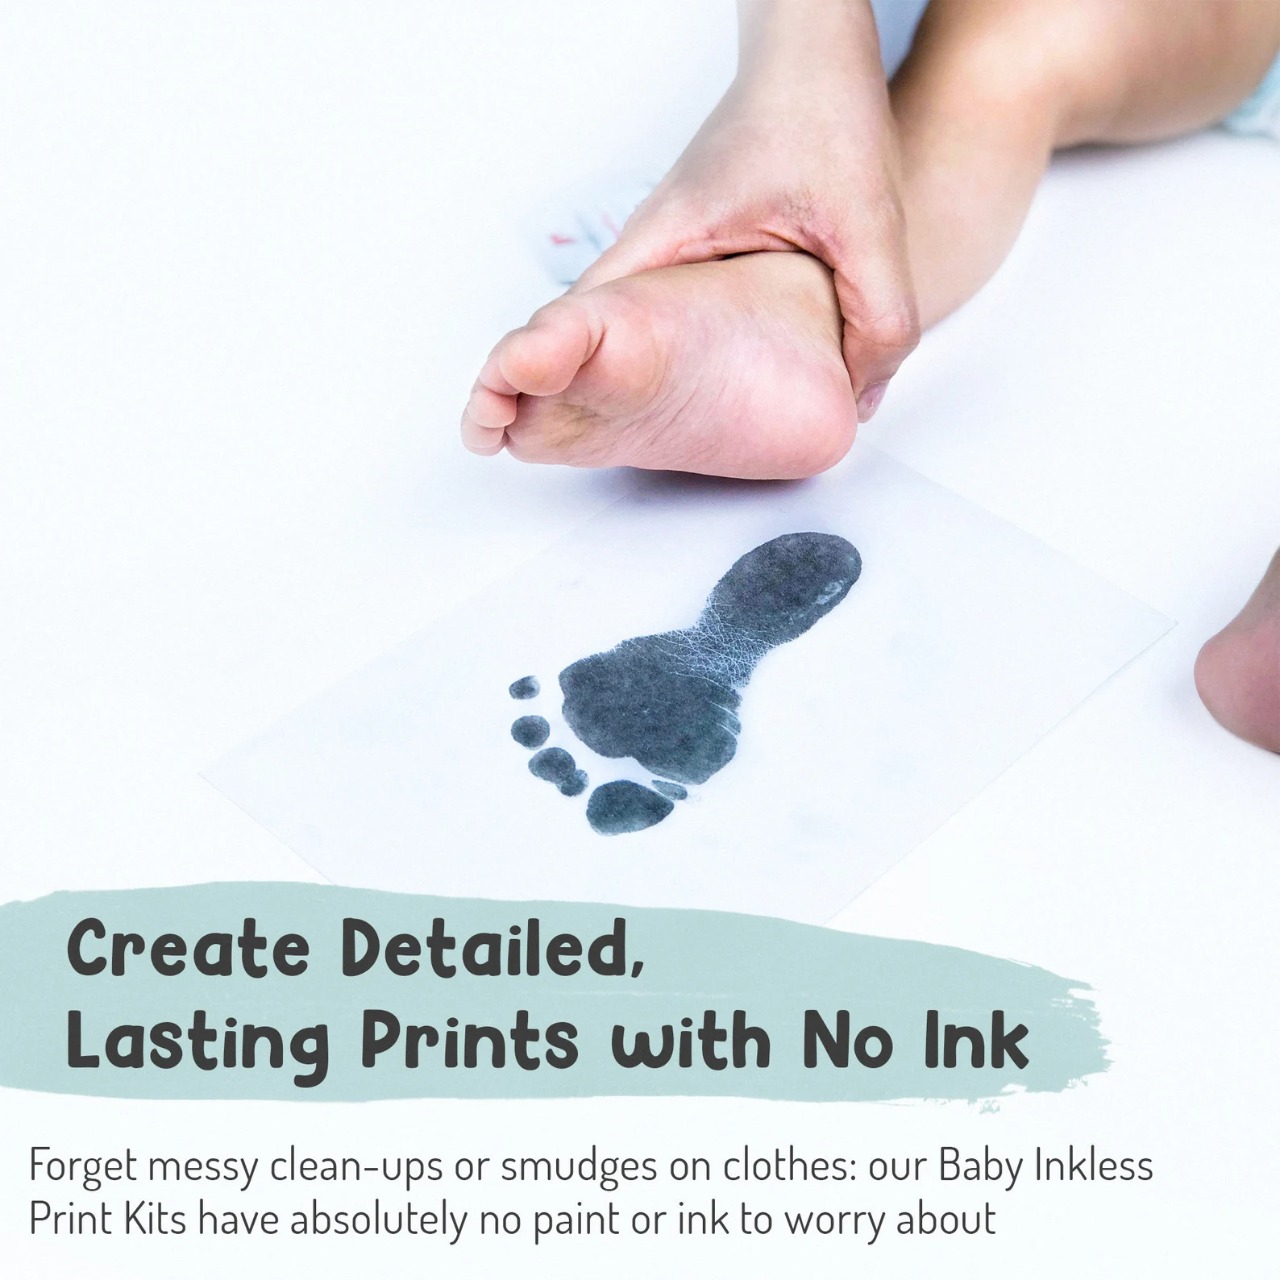 Keepsake Handprint Hand Print Kit Memory DIY Foot Print w/Molding Tray NEW